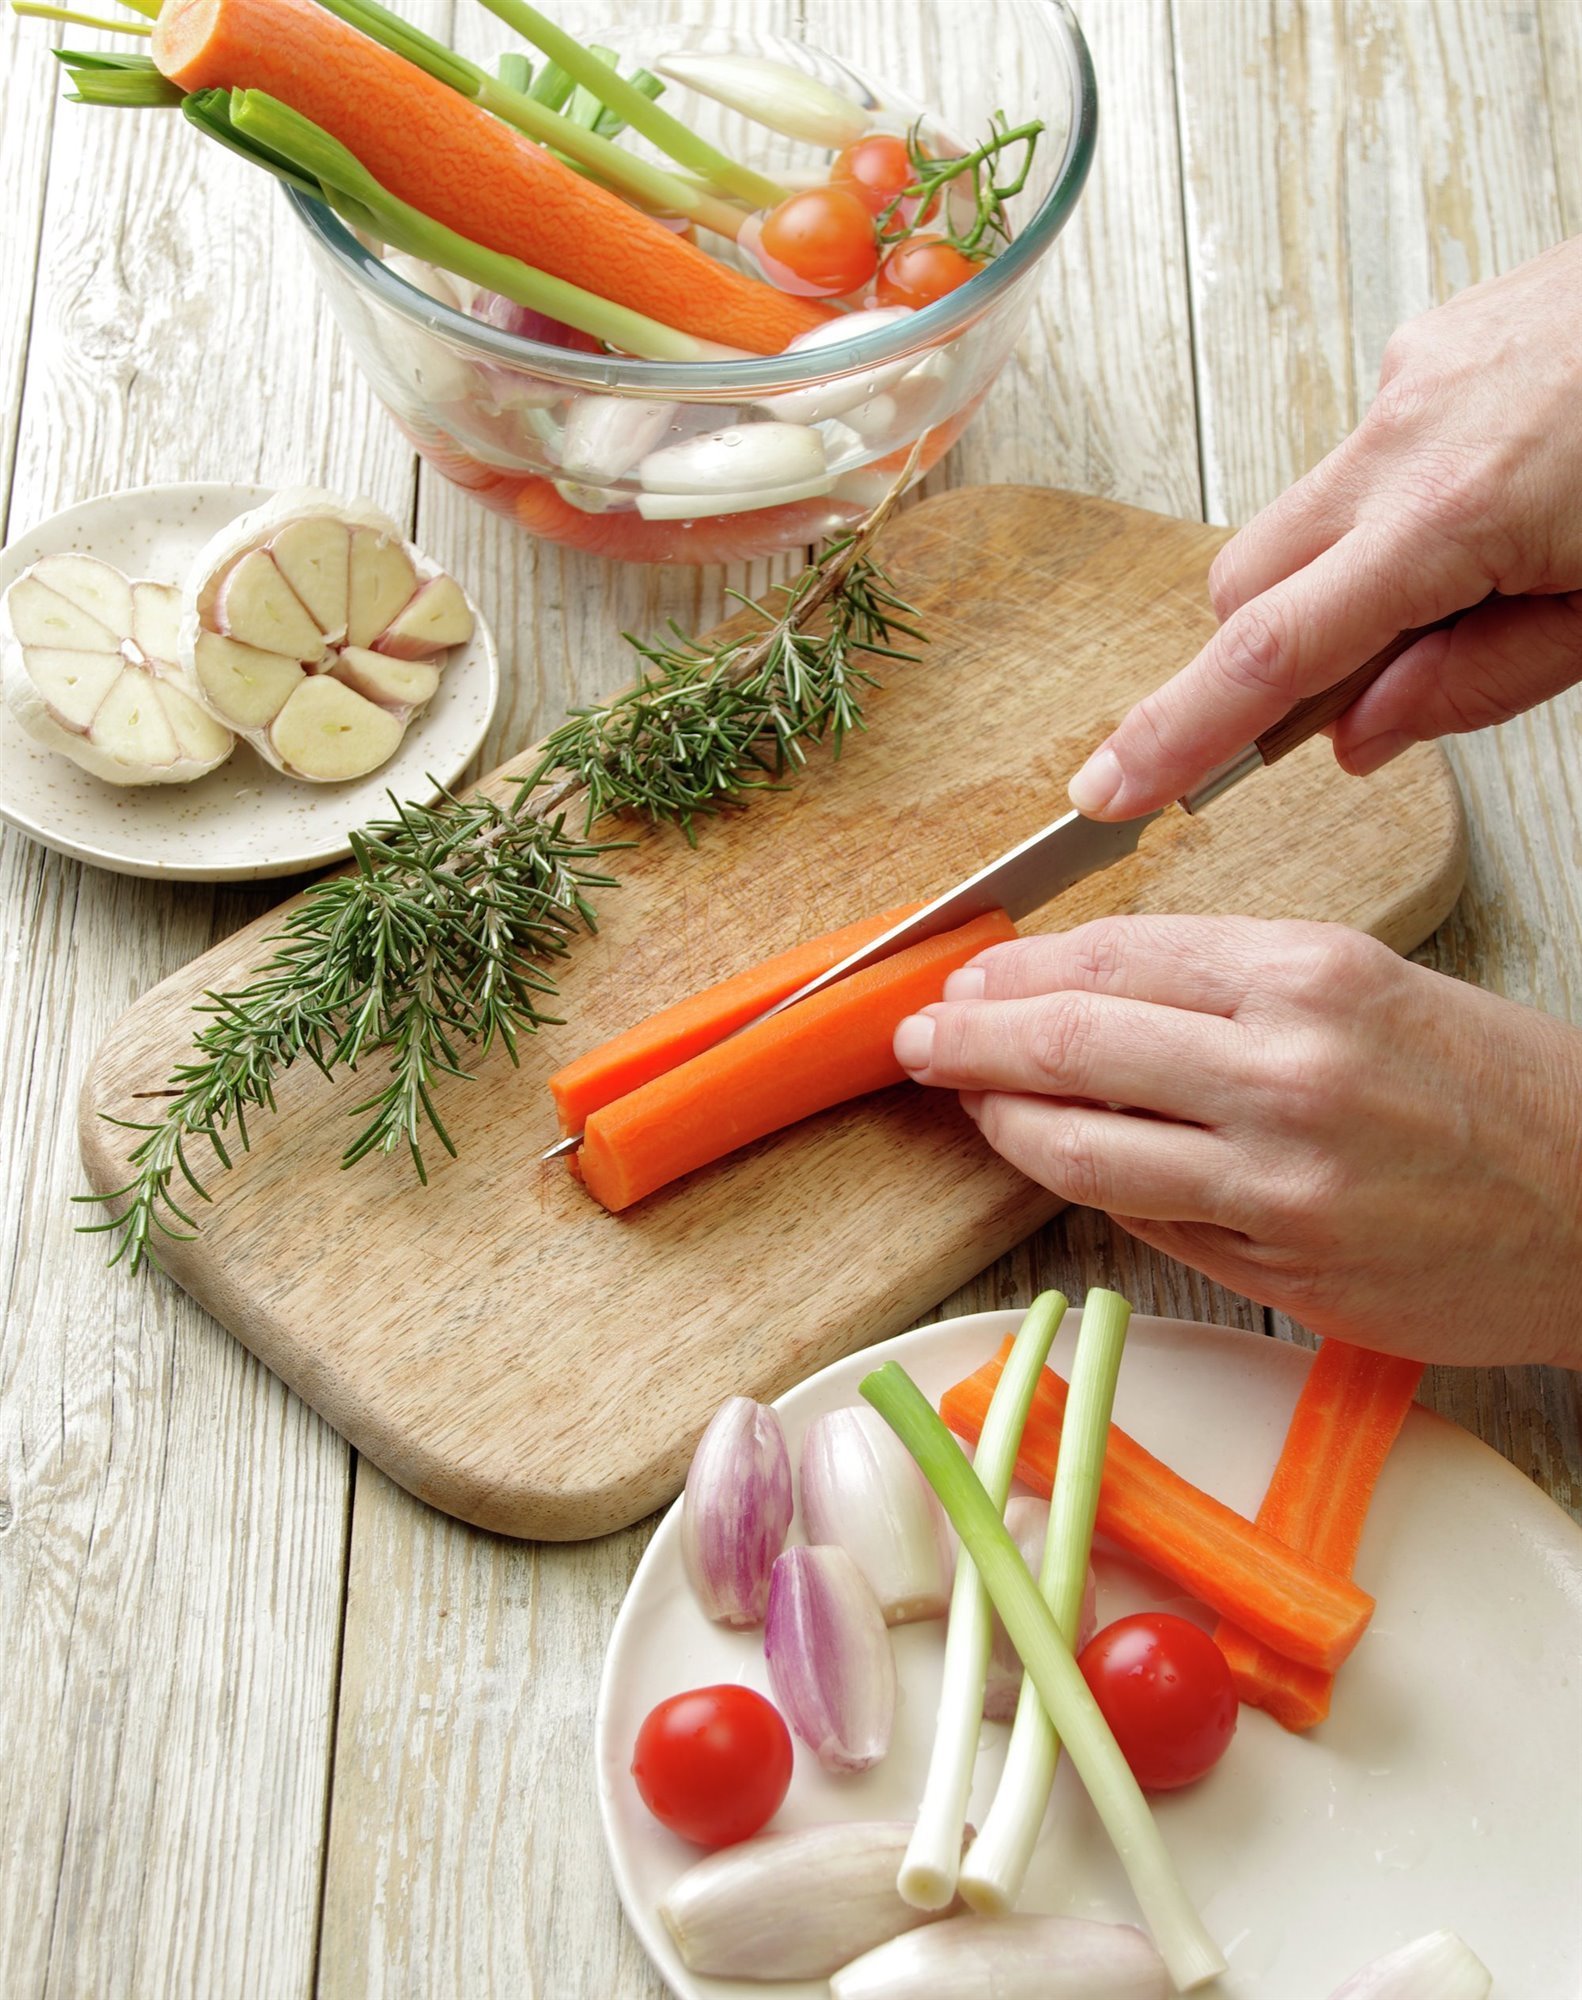 1. Corta ajetes y zanahoria